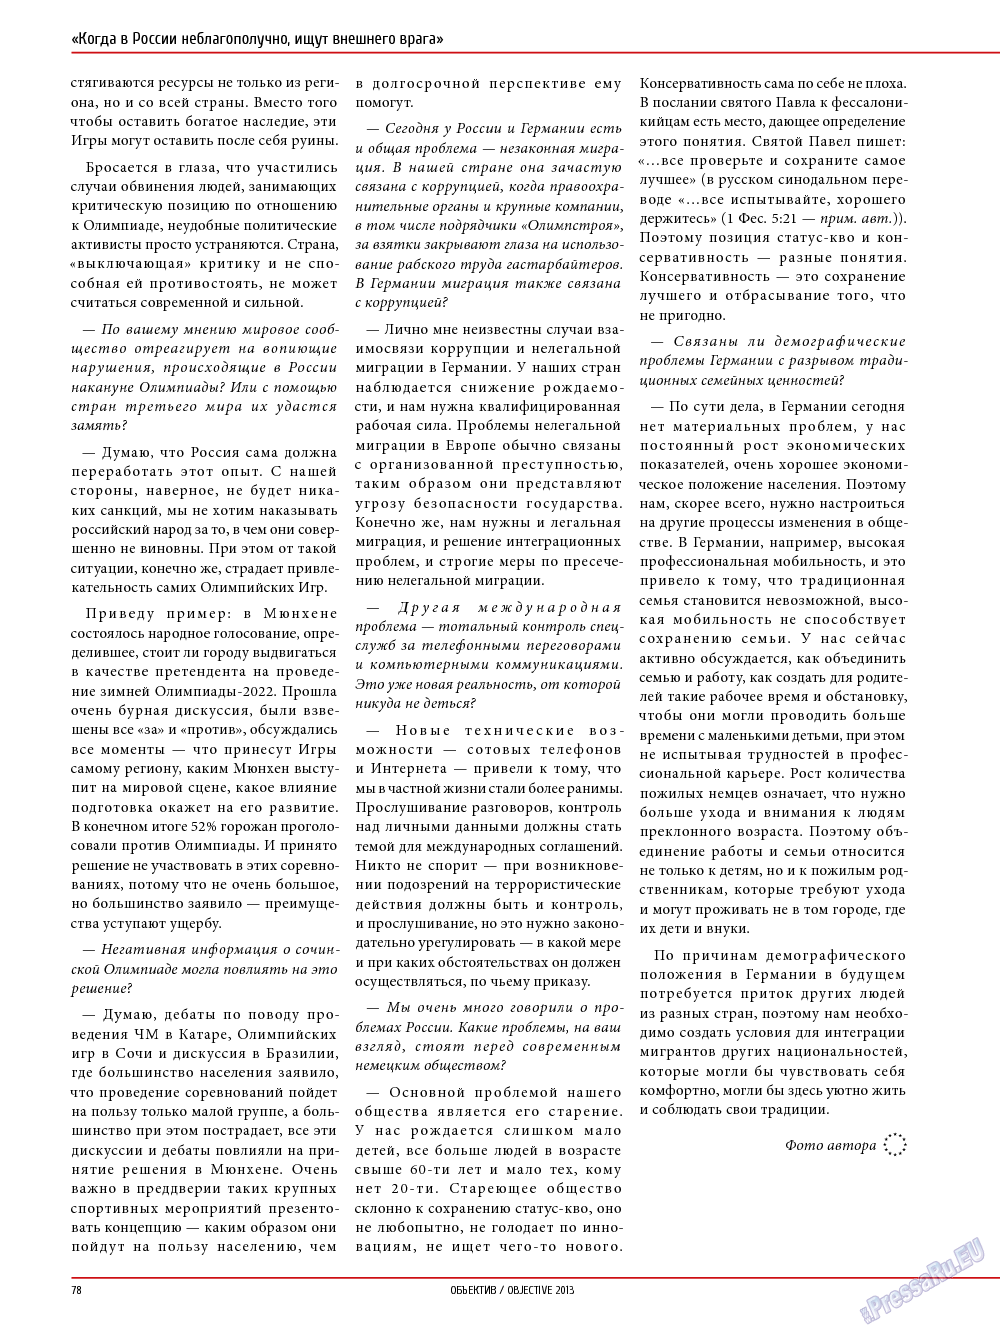 Объектив EU, журнал. 2014 №1 стр.78